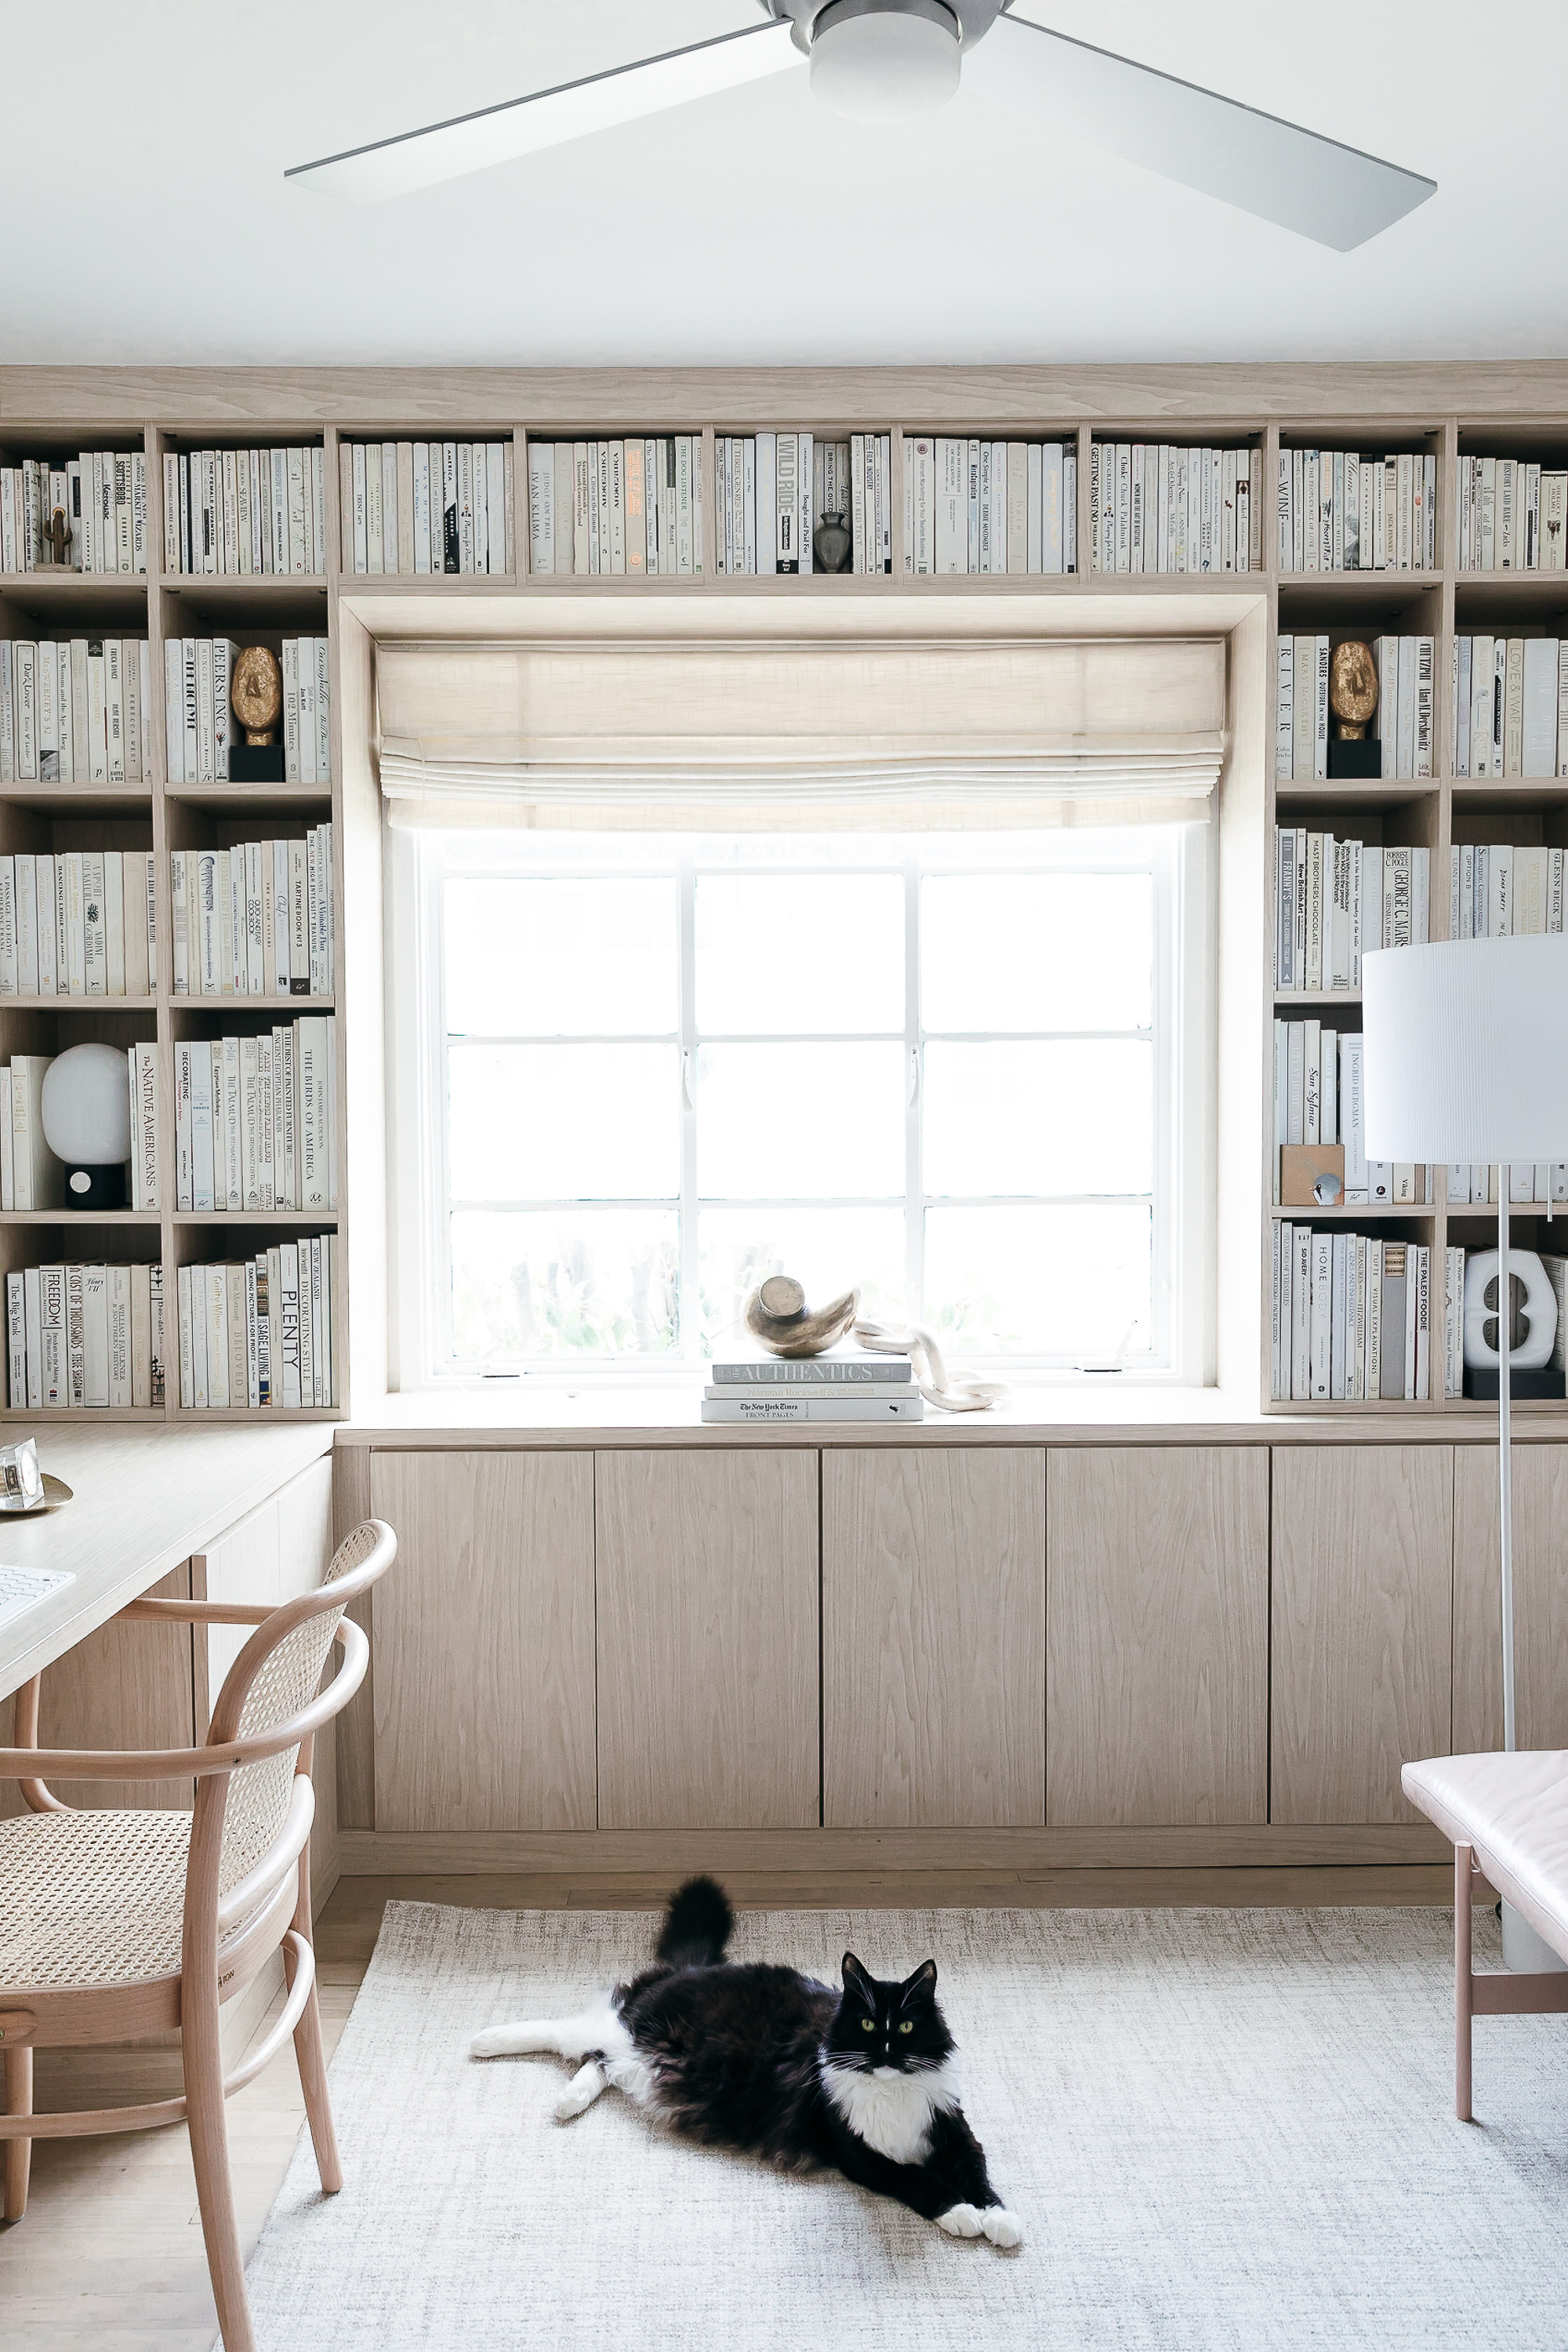 California Closets Built-In Bookshelves: Our Home Office Design